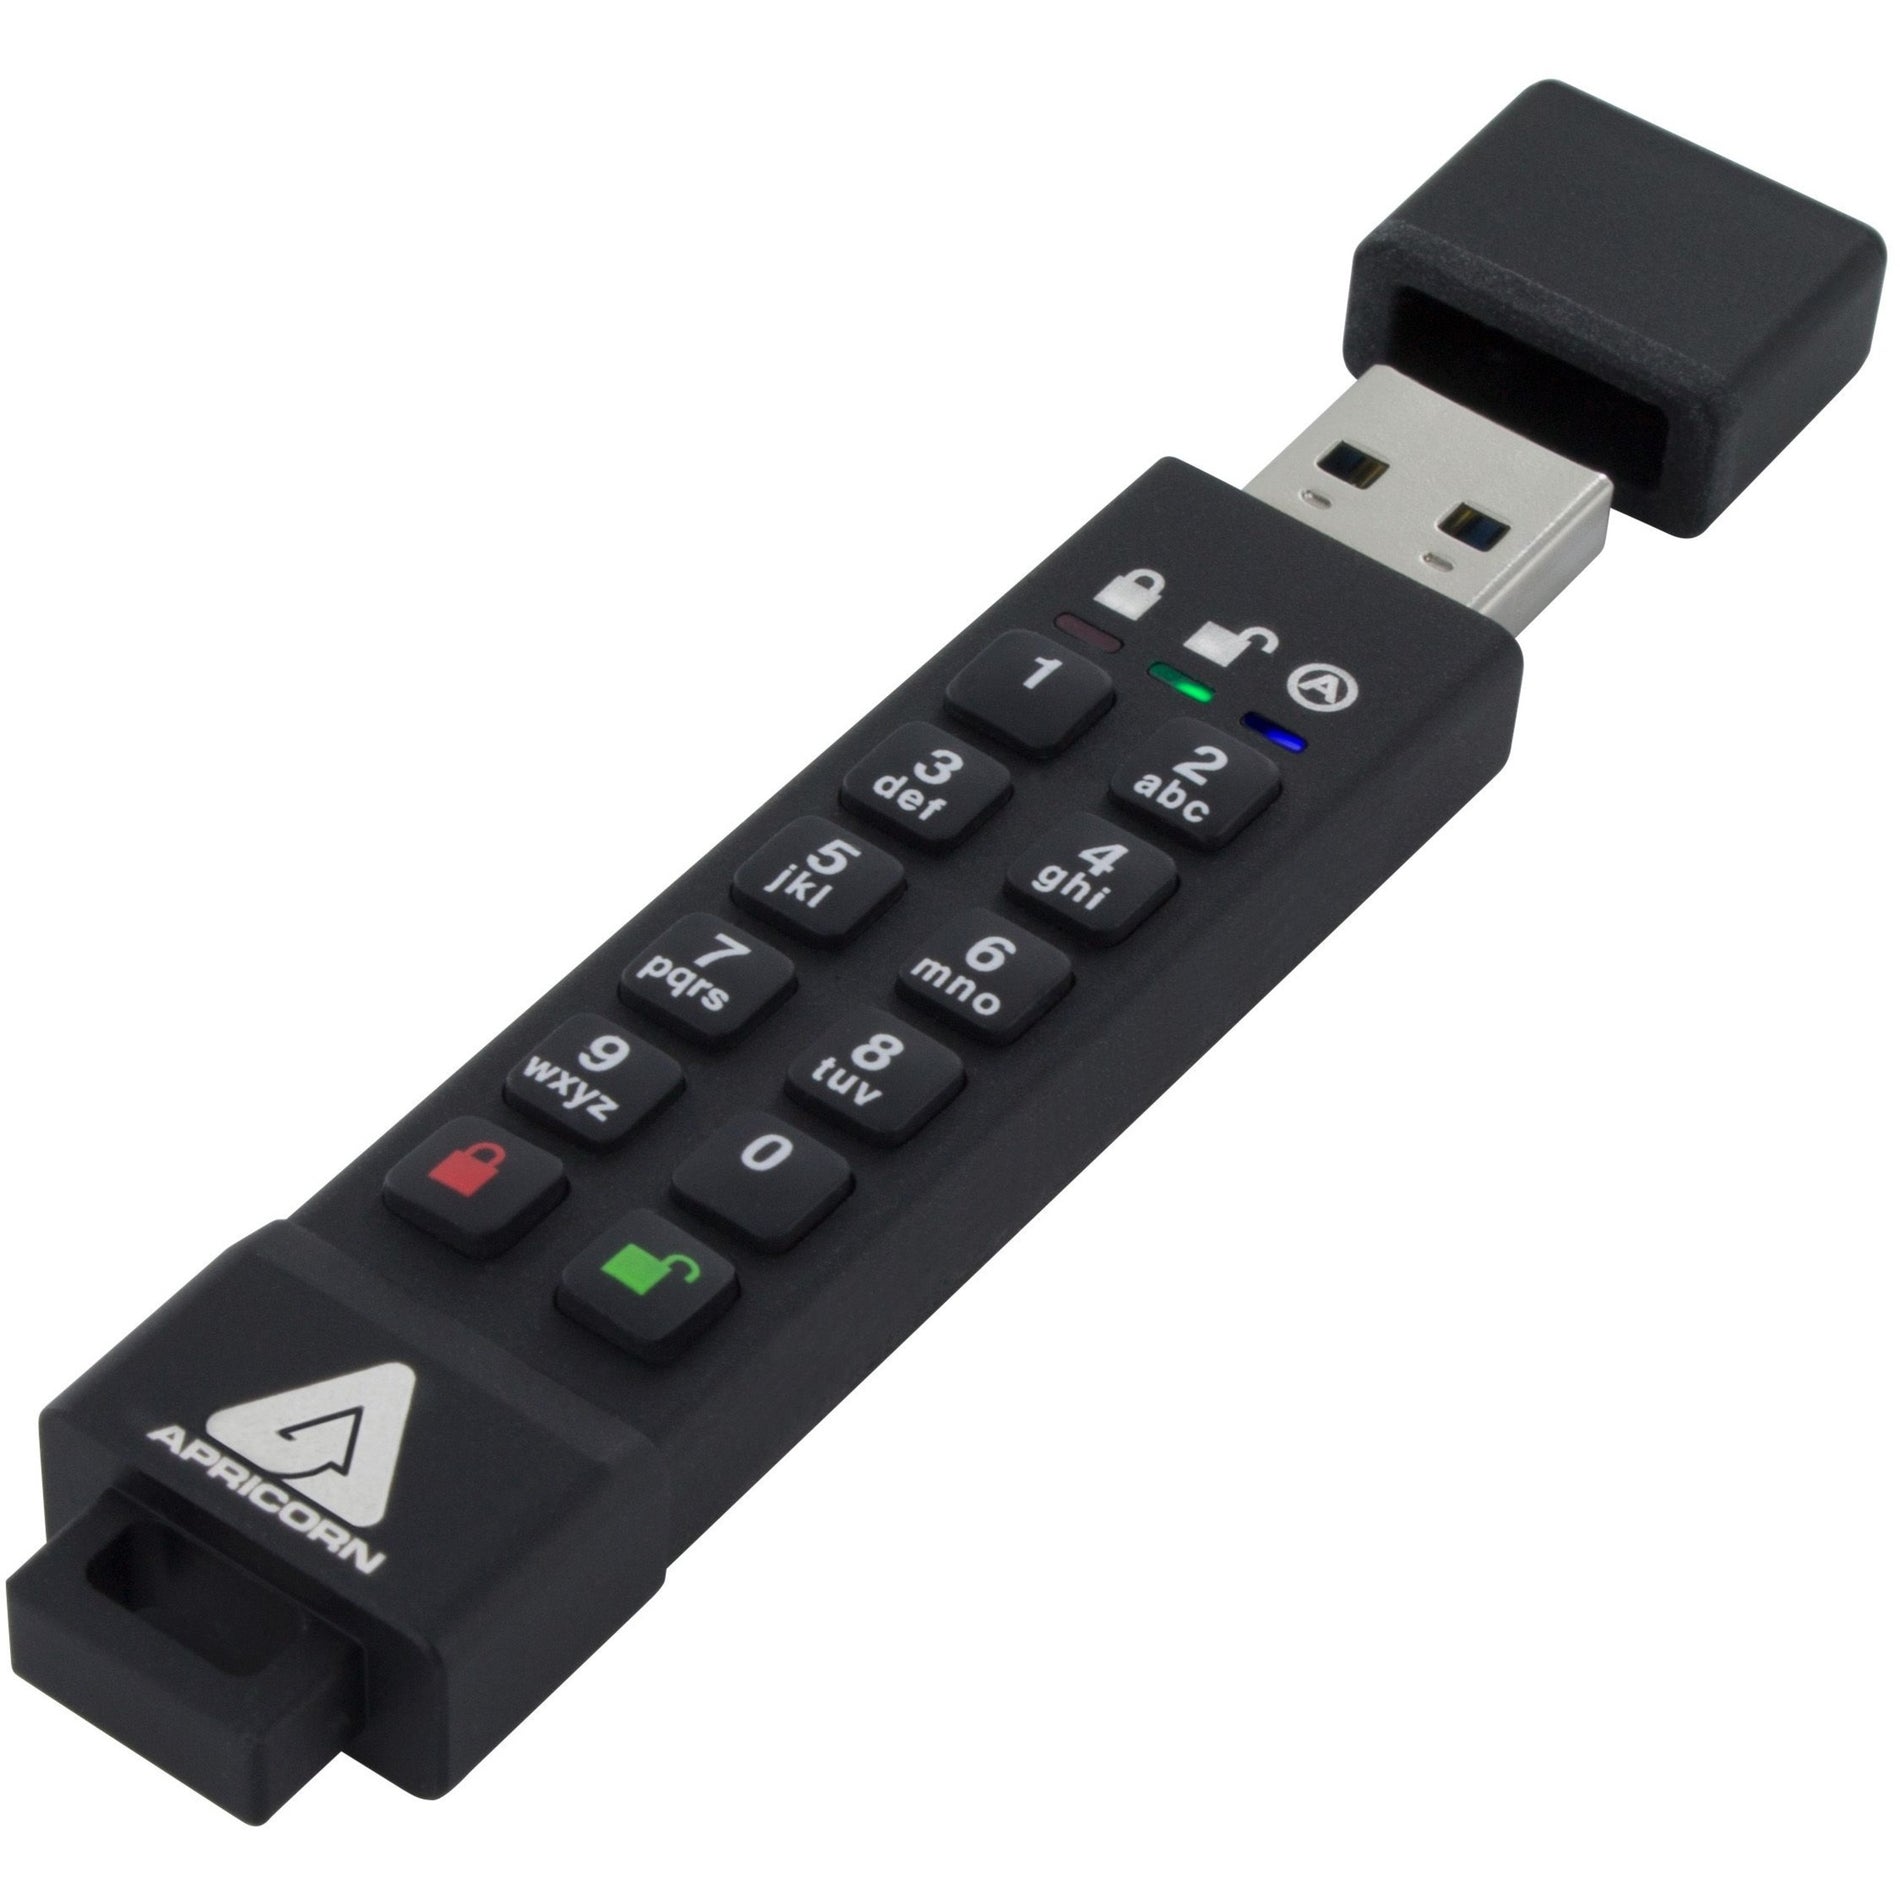 Apricorn ASK3Z-32GB Aegis Secure Key 3z USB 3.1 Flash Drive, 32GB, 256-bit AES Encryption